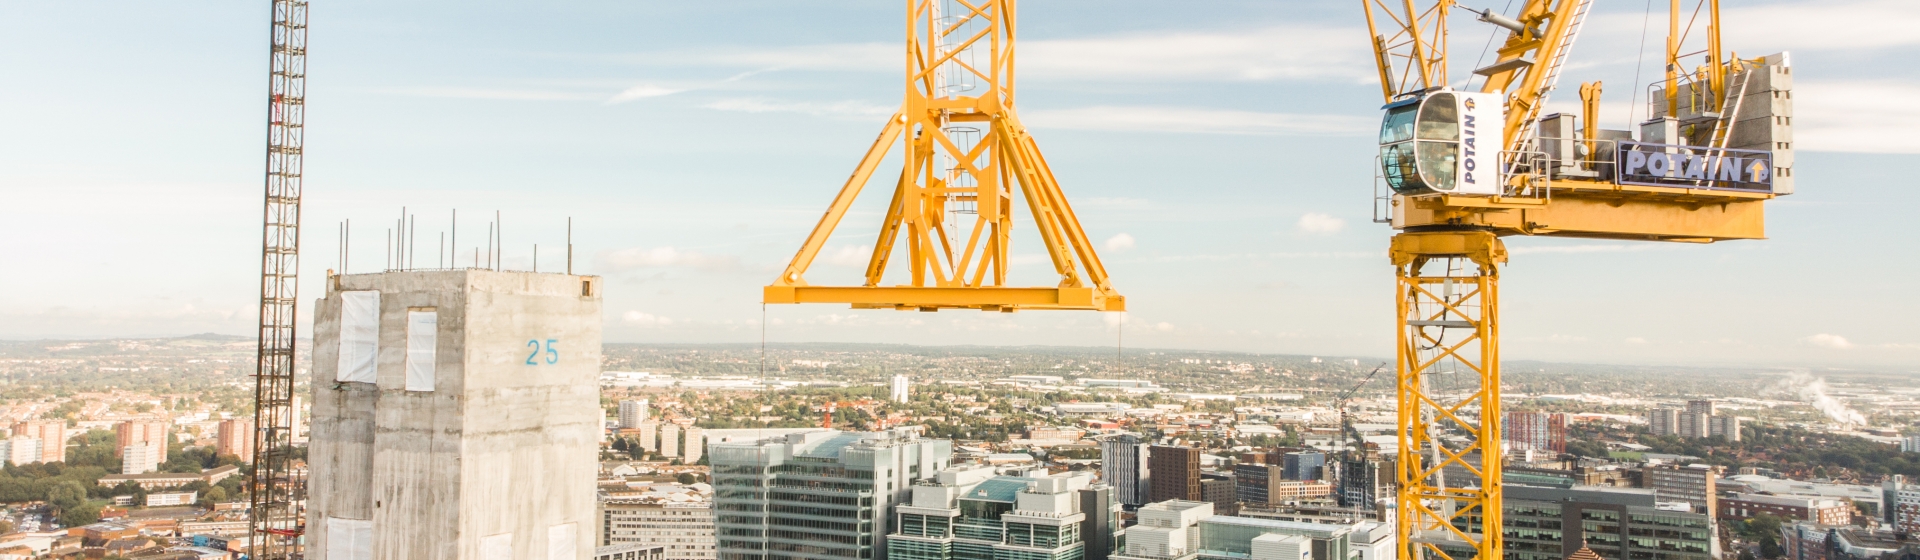 Potain-MR-295-tower-cranes-helping-build-Birminghams-tallest-office-building-2.jpg